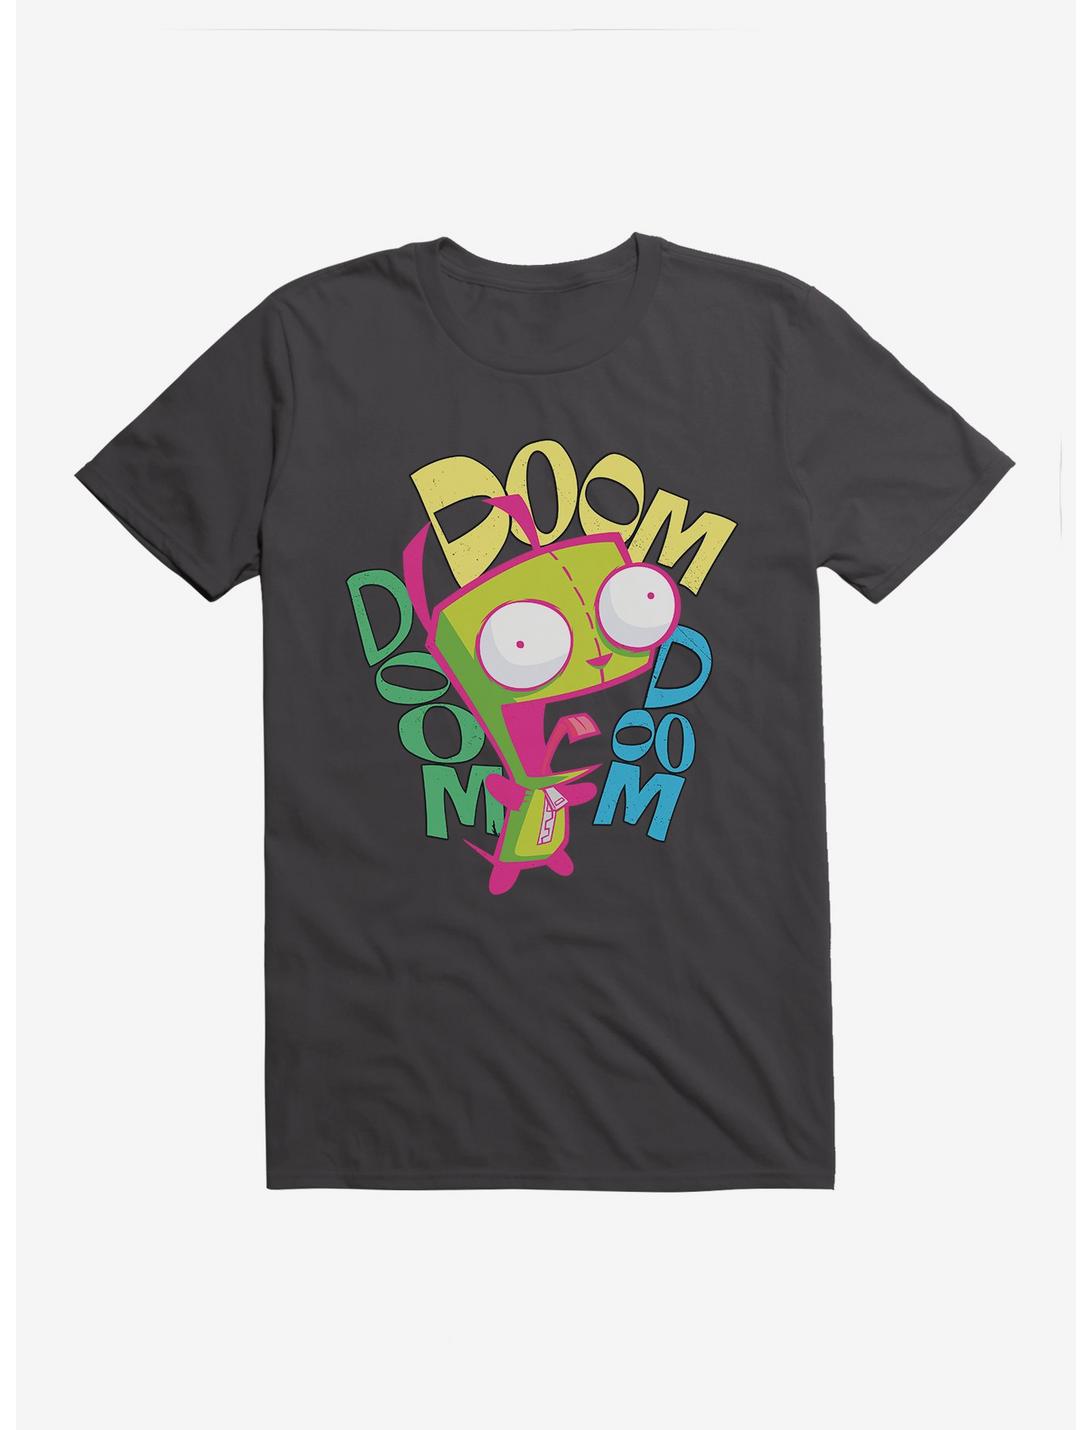 Invader Zim Doom Doom Doom T-Shirt, DARK GREY, hi-res